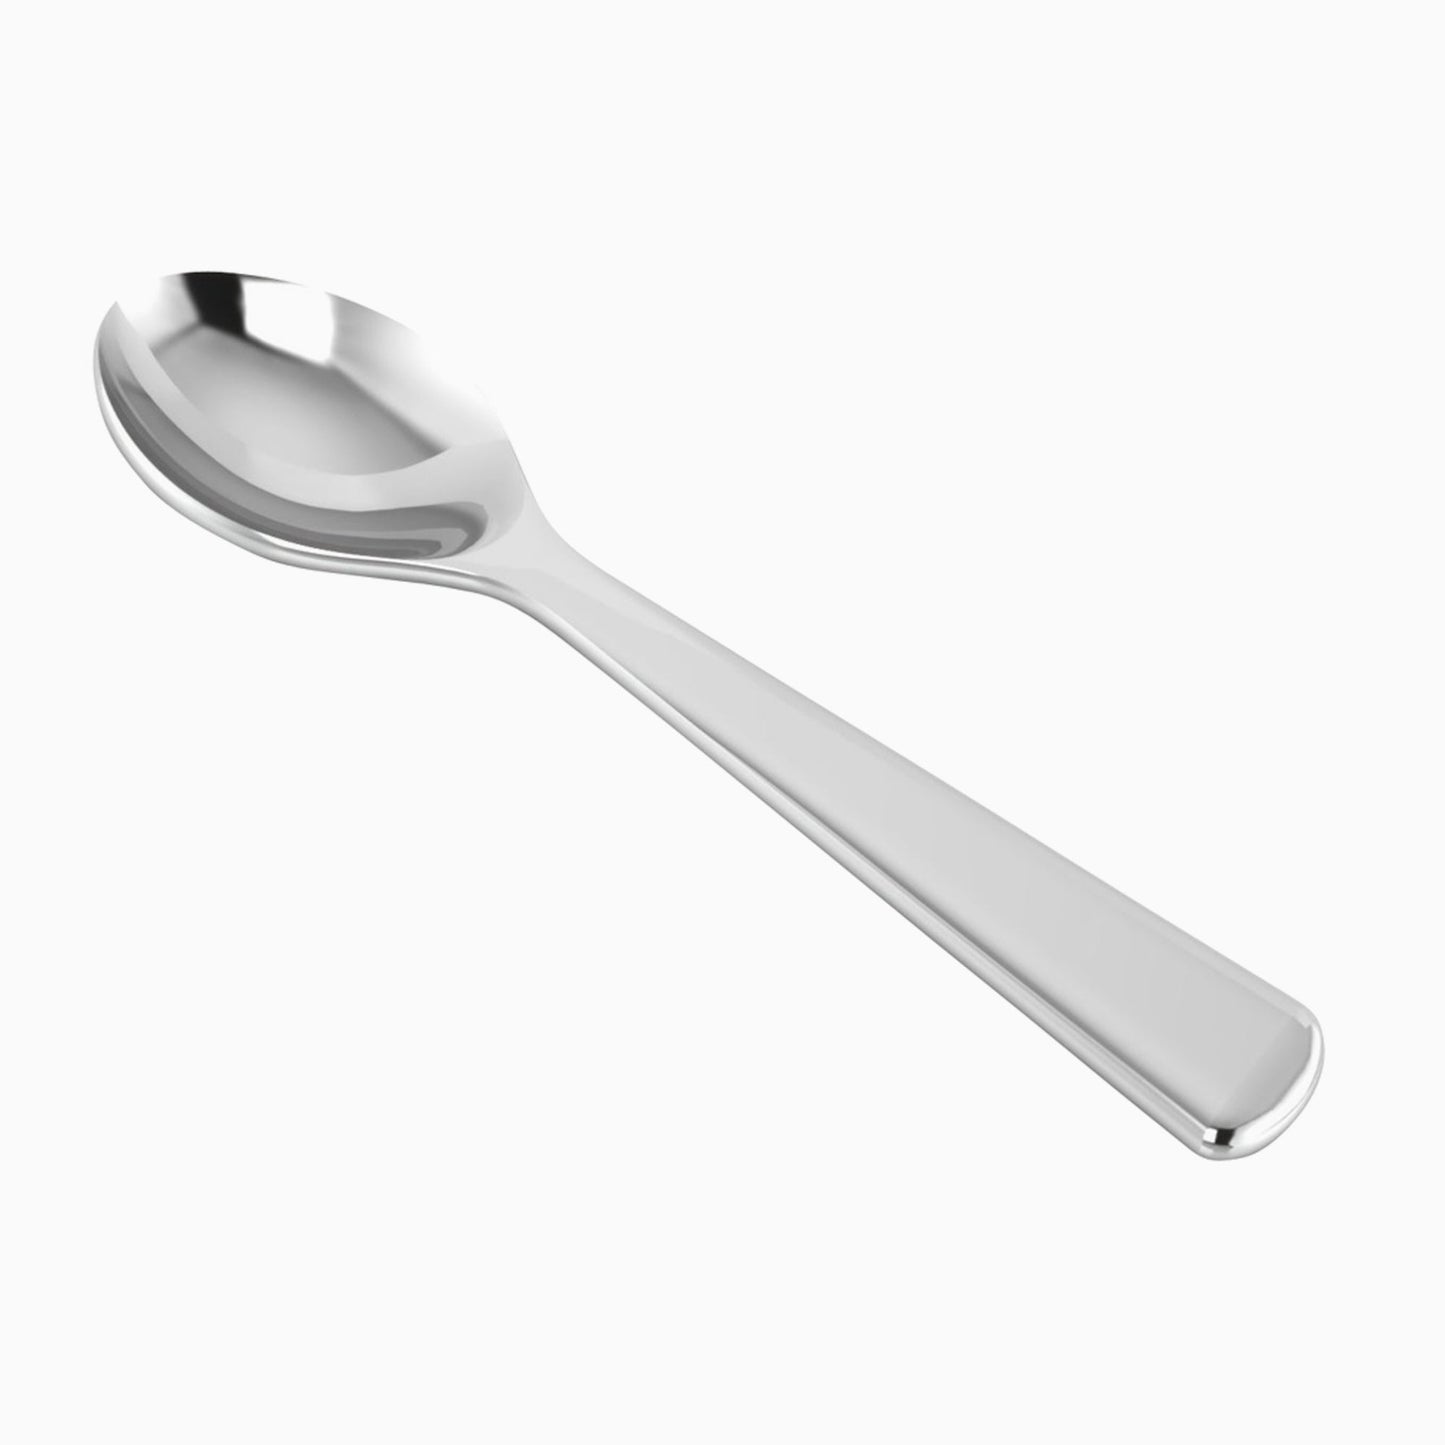 Classic Sterling Silver Baby Feeding Spoon by Krysaliis